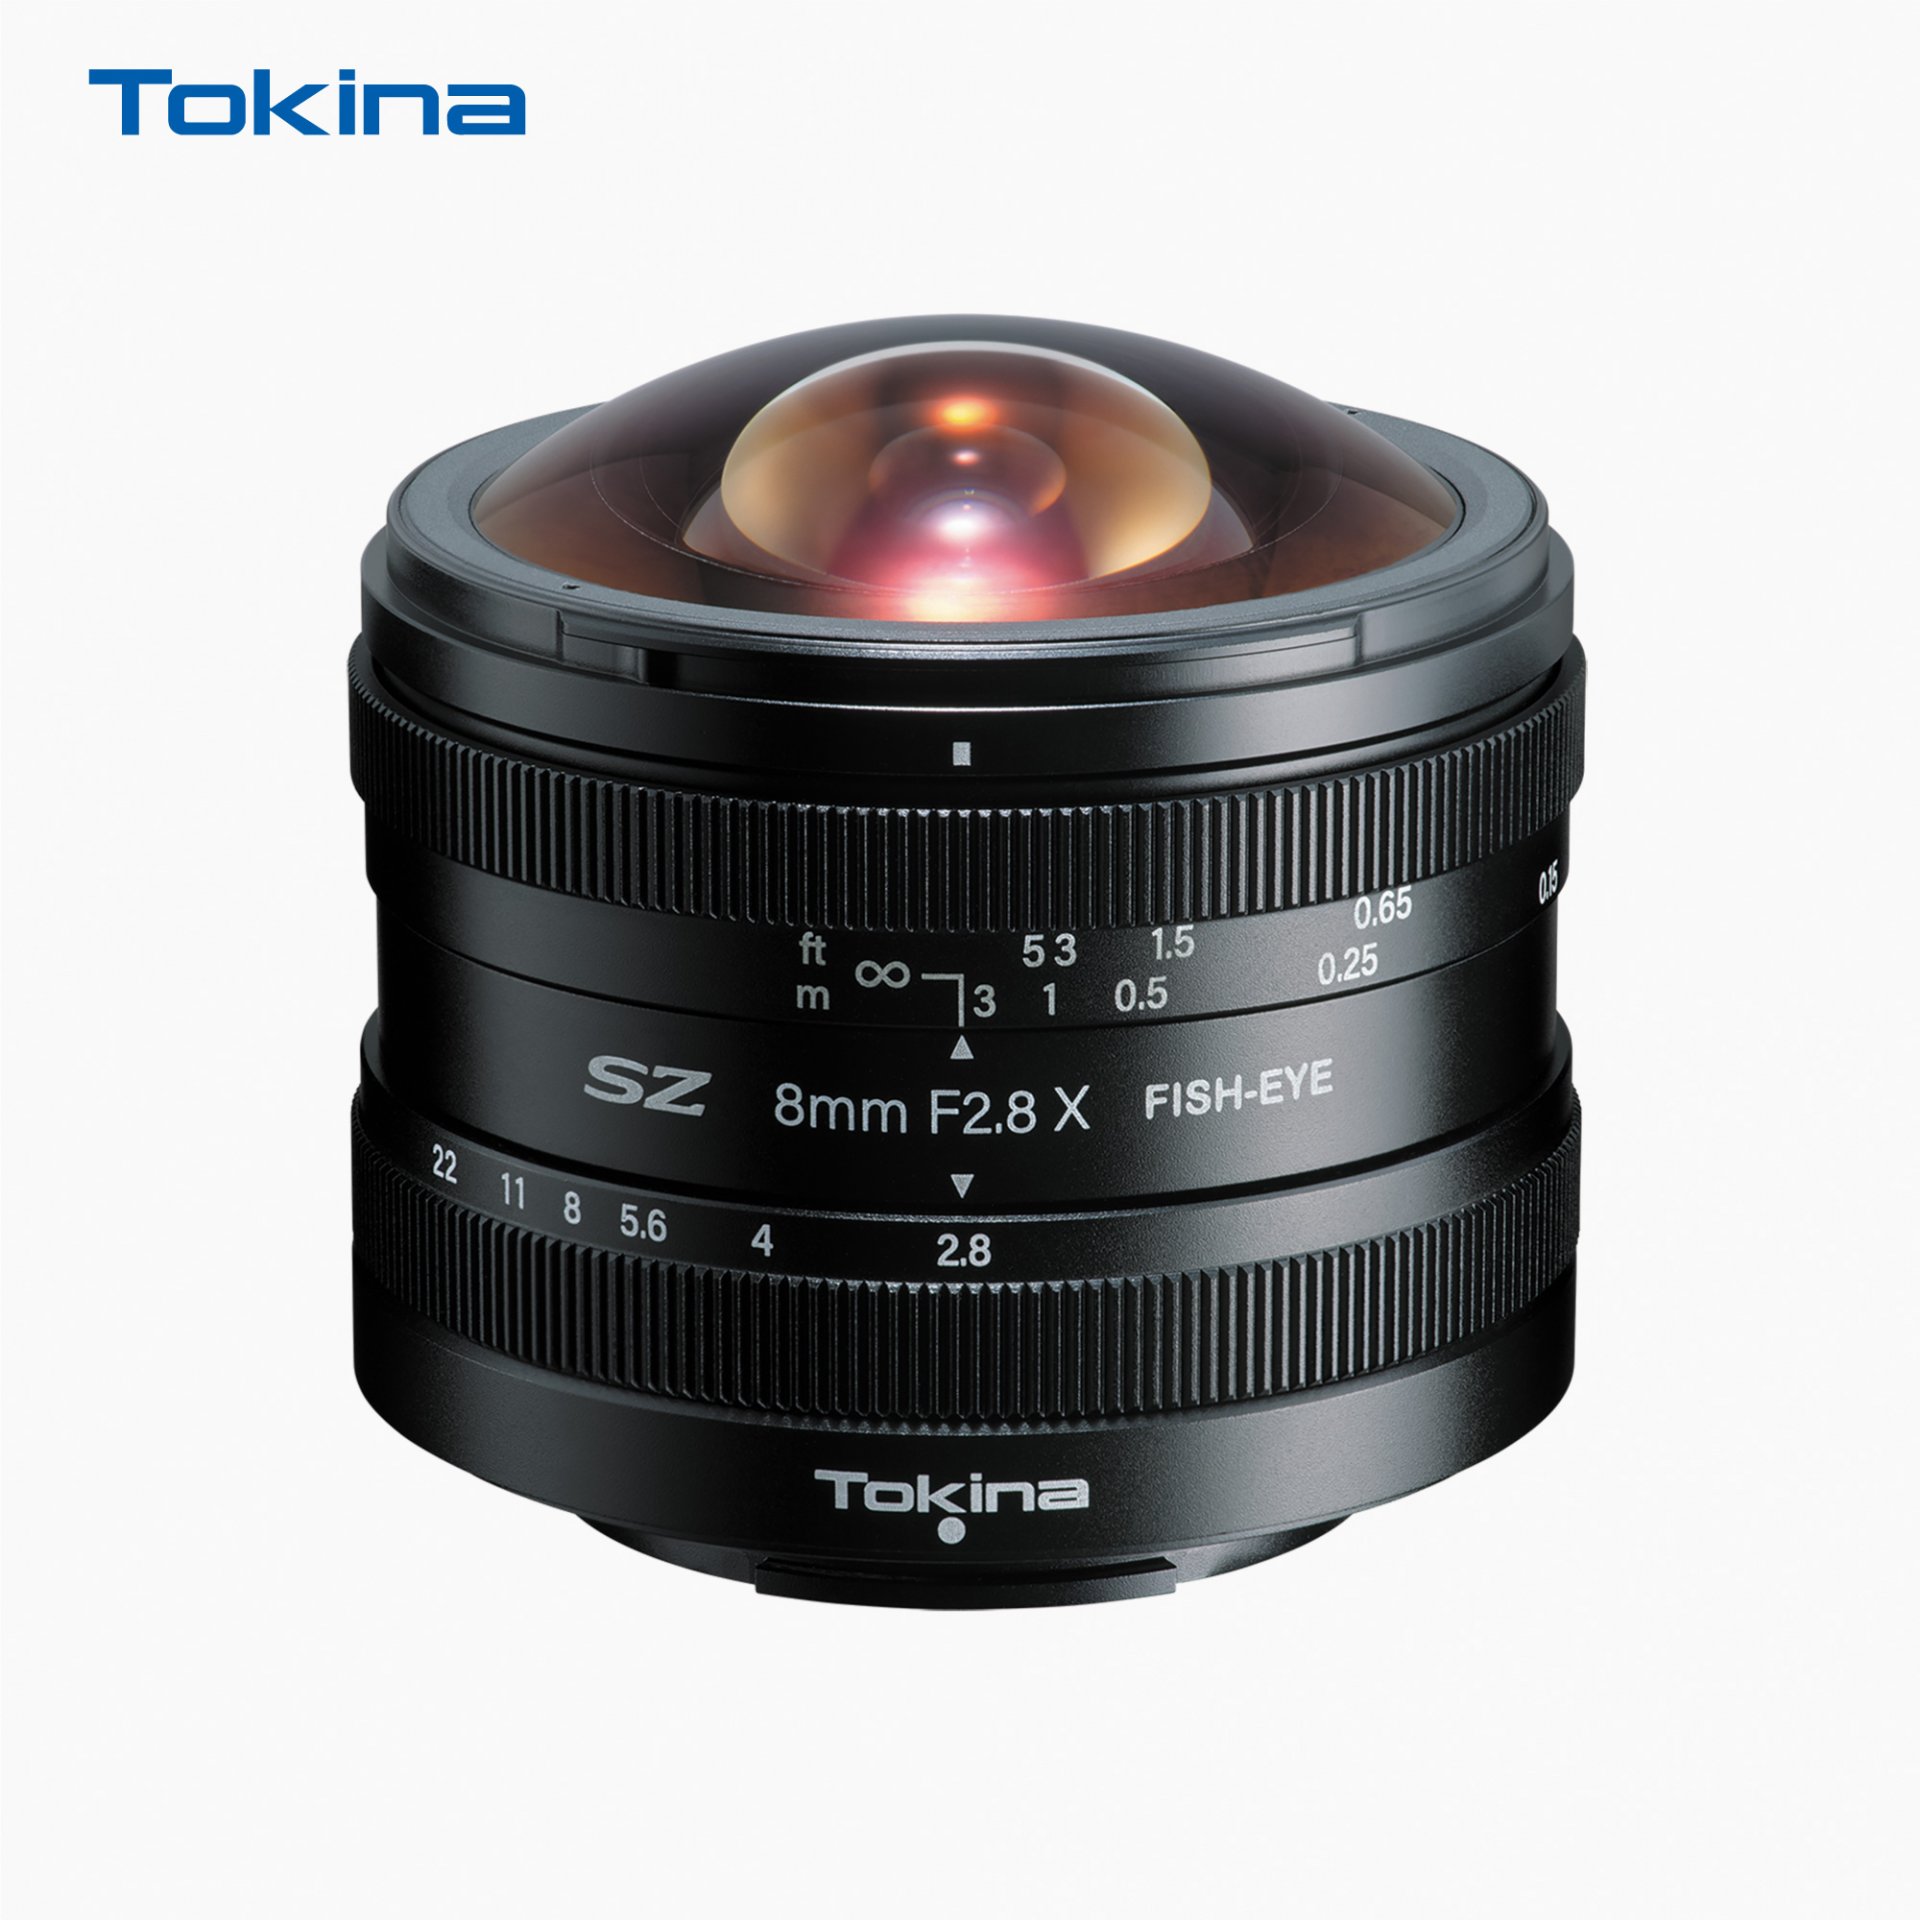 Tokina SZ 8mm F2.8 X FISH-EYE